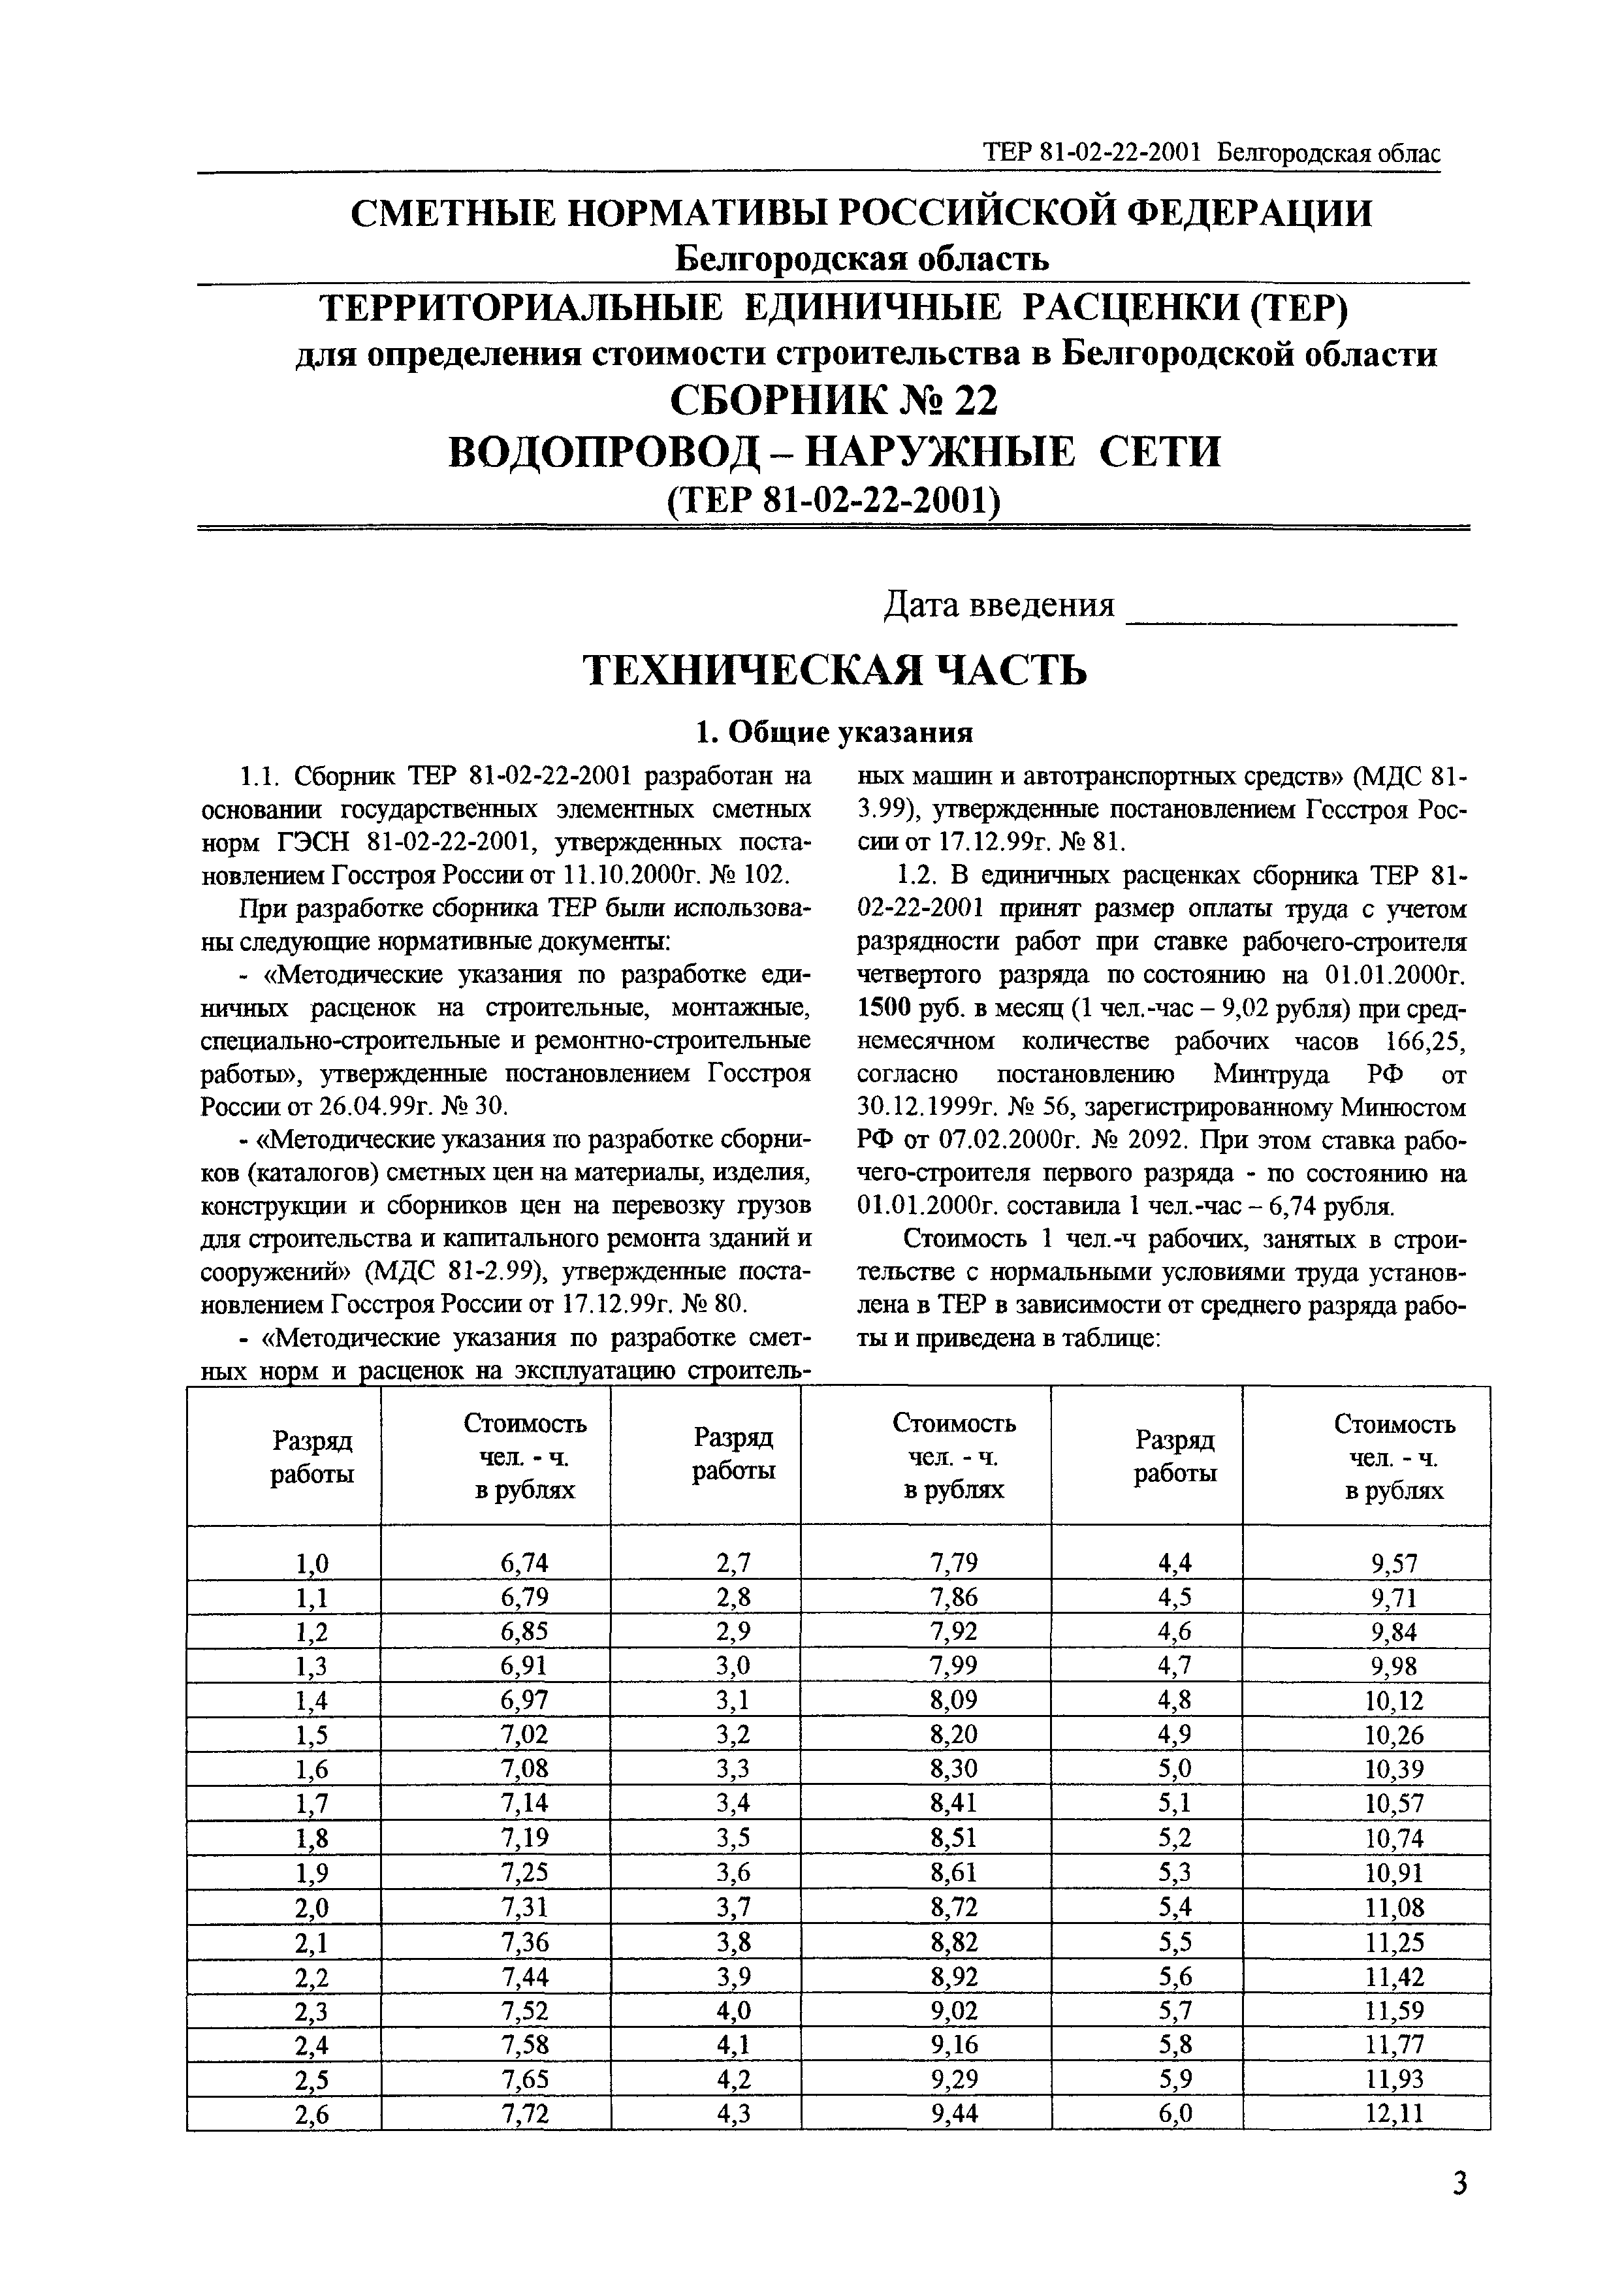 ТЕР 2001-22 Белгородской области